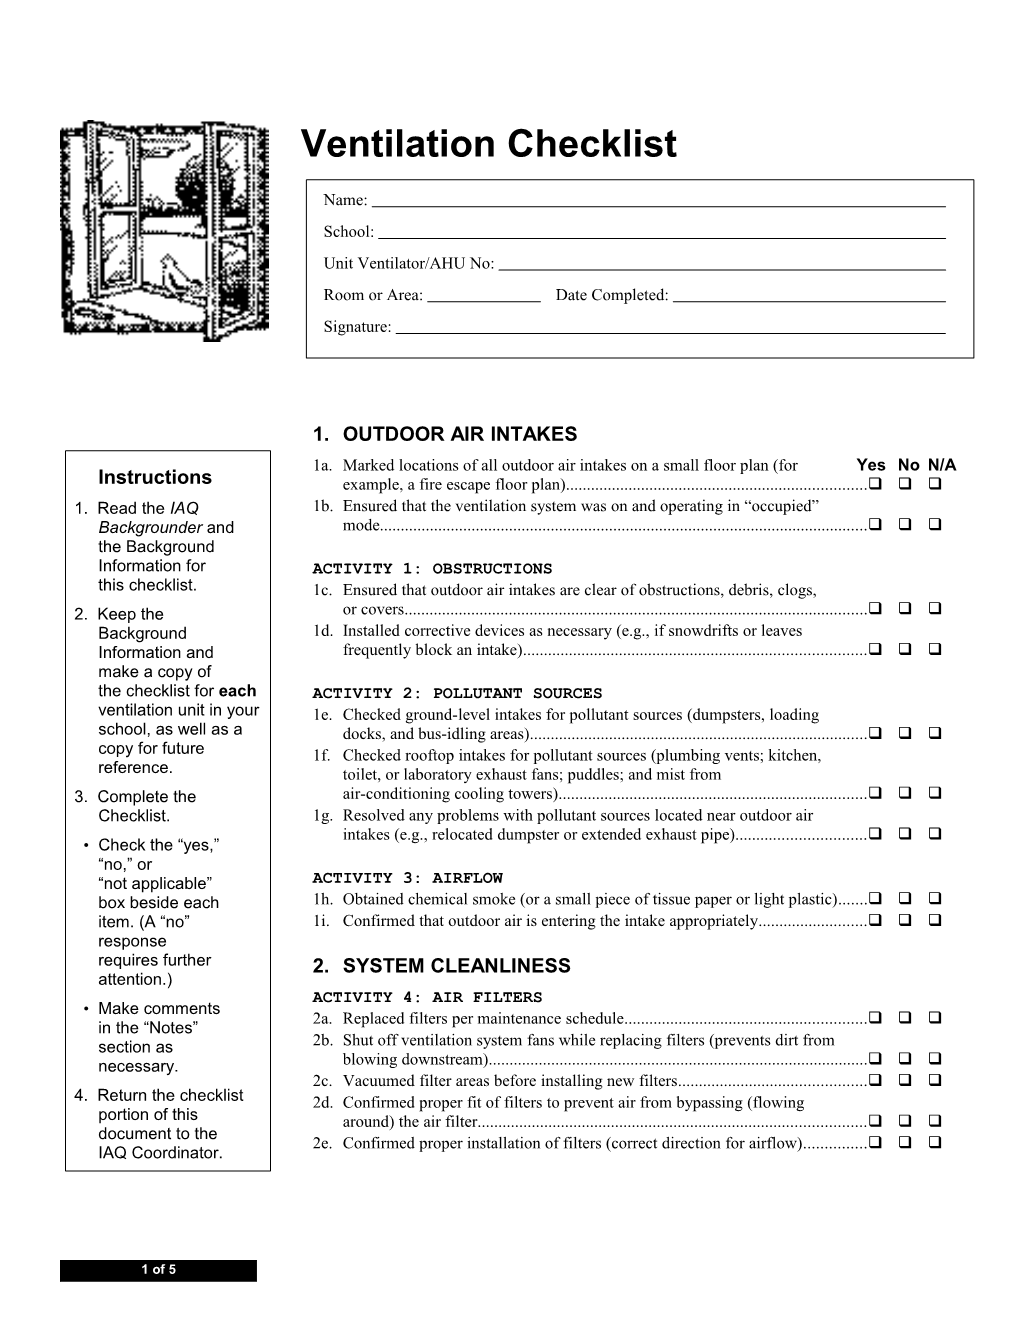 Ventilation Checklist